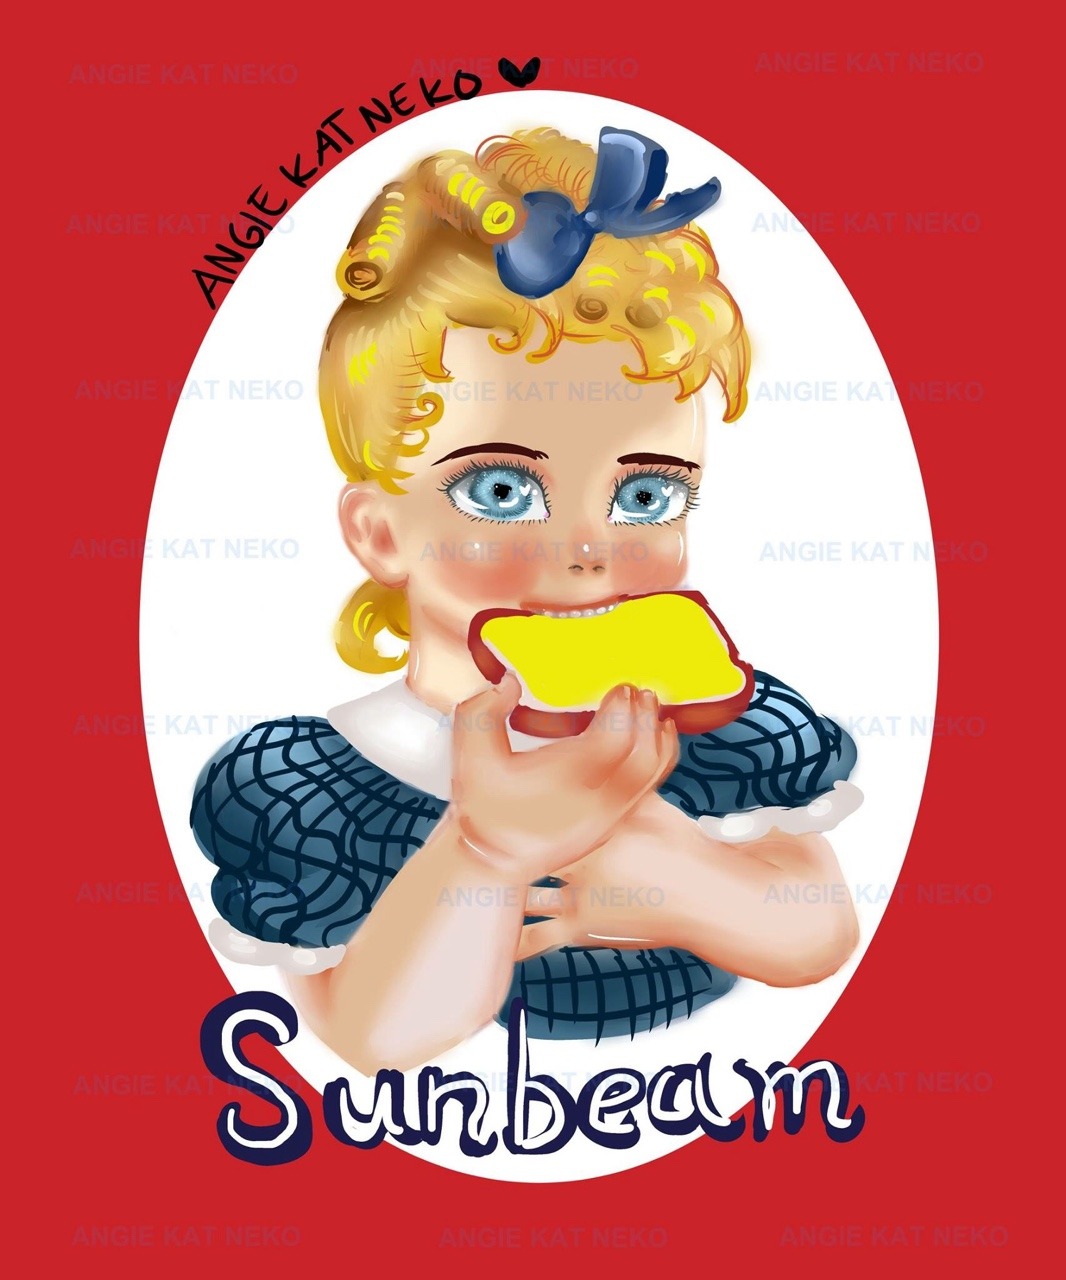 Angie's Art, The sunbeam bread girl.